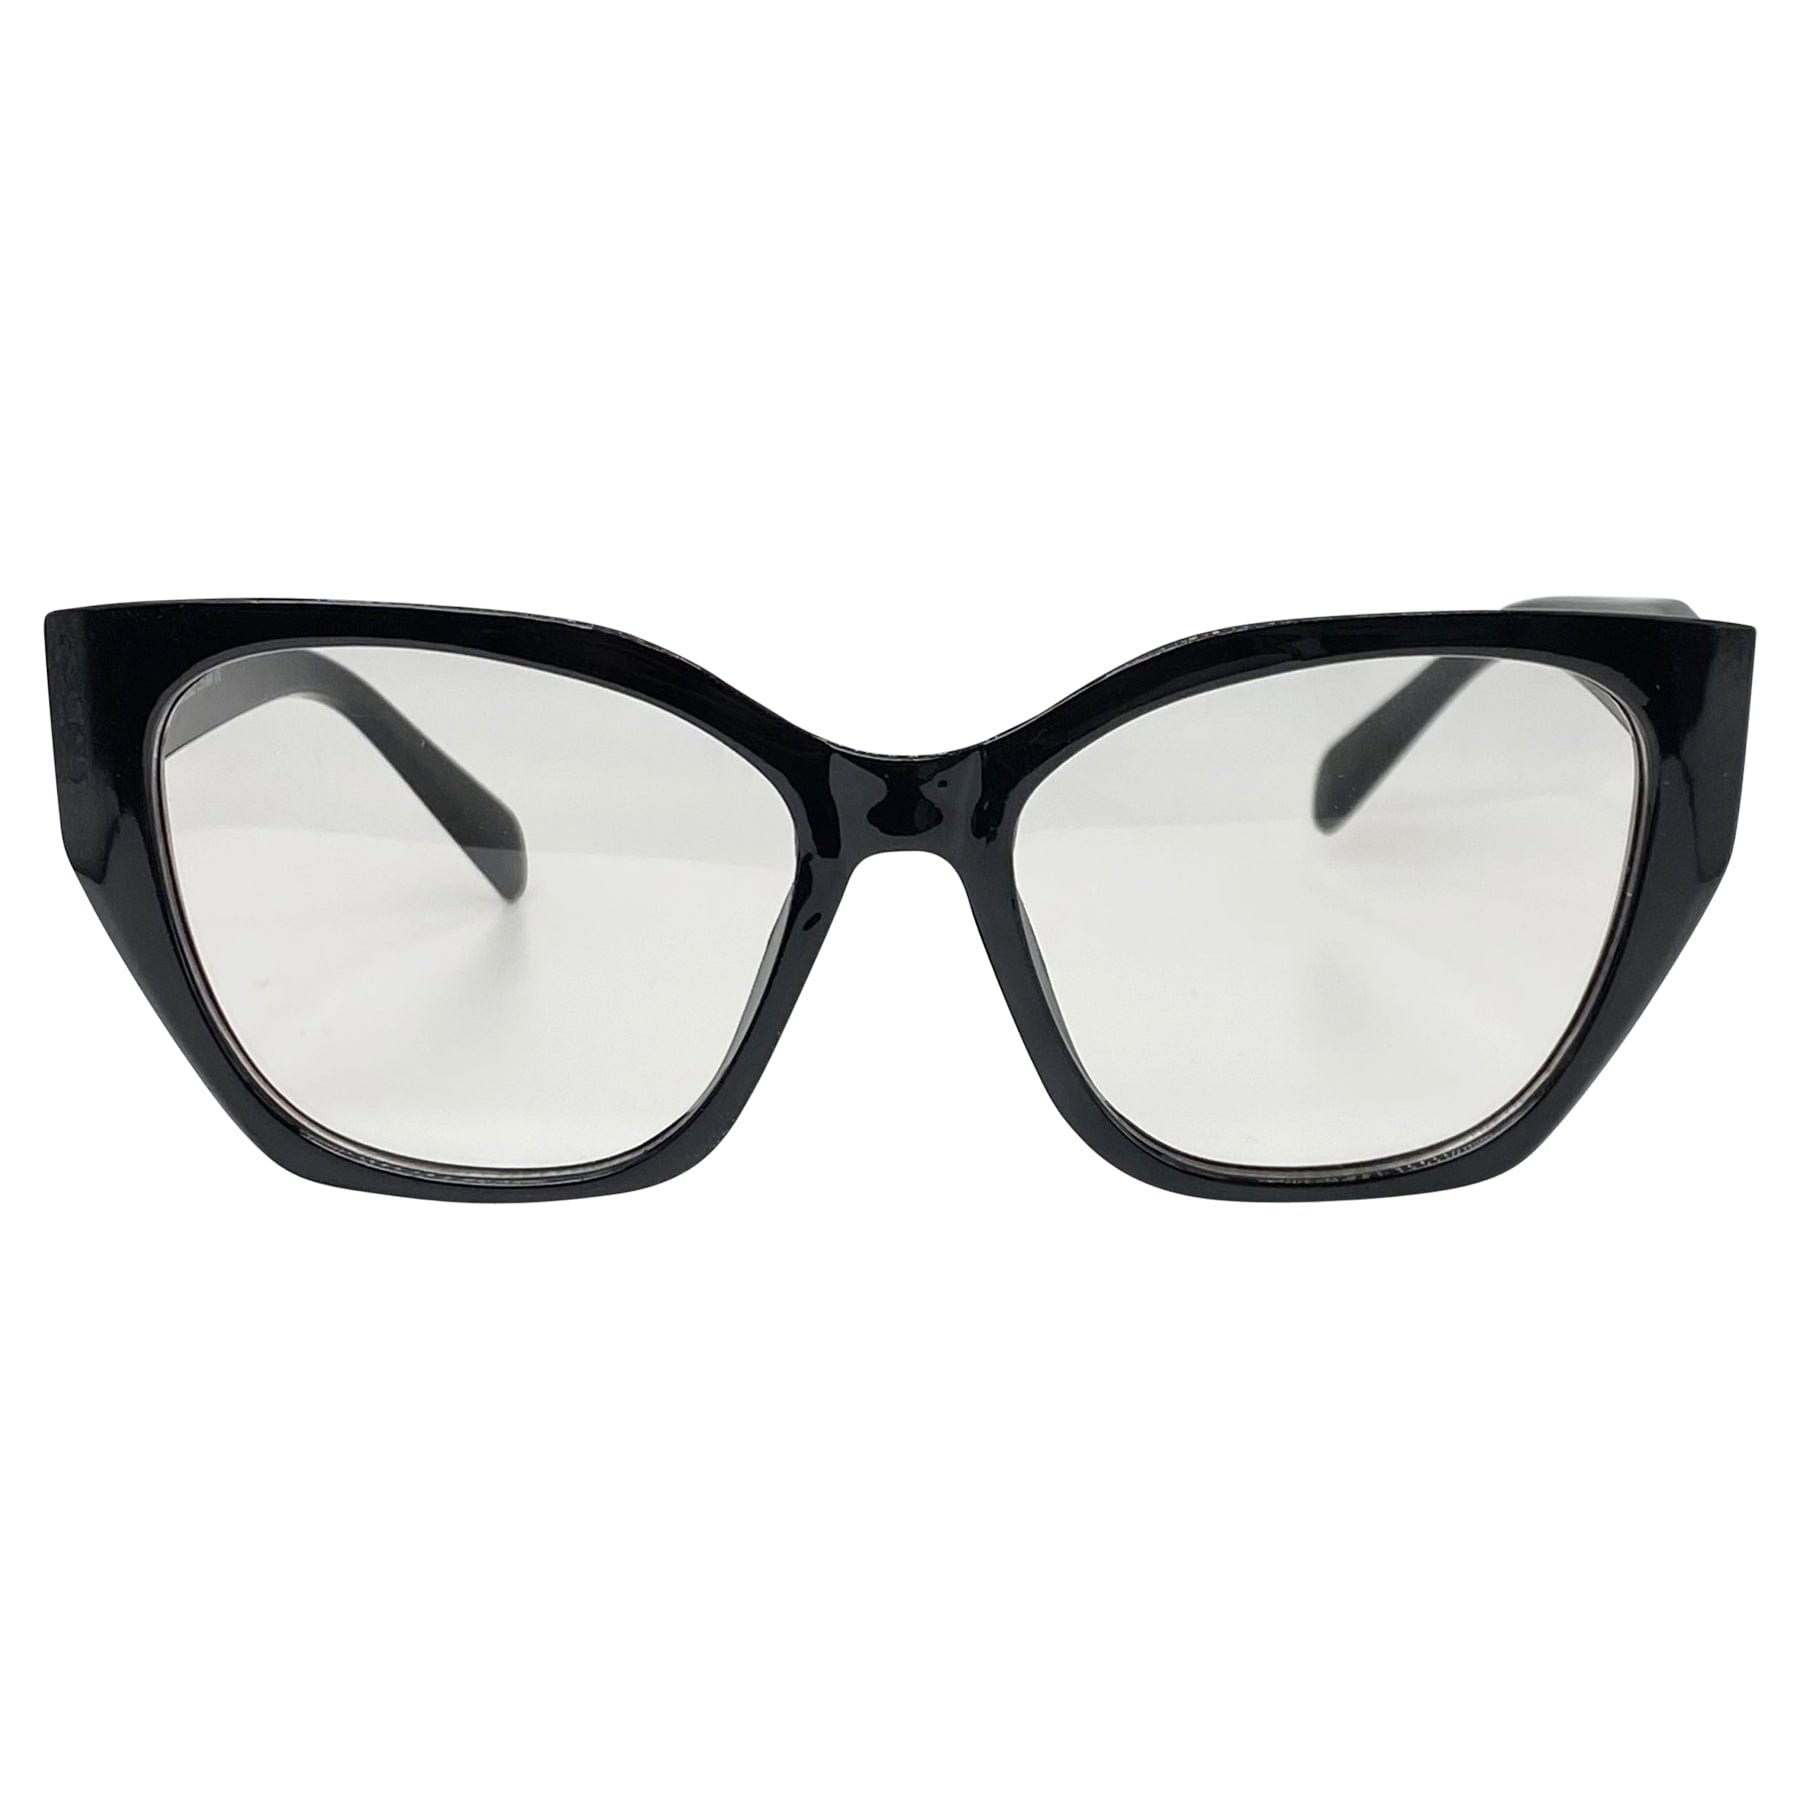 black angular cat eye clear glasses women 